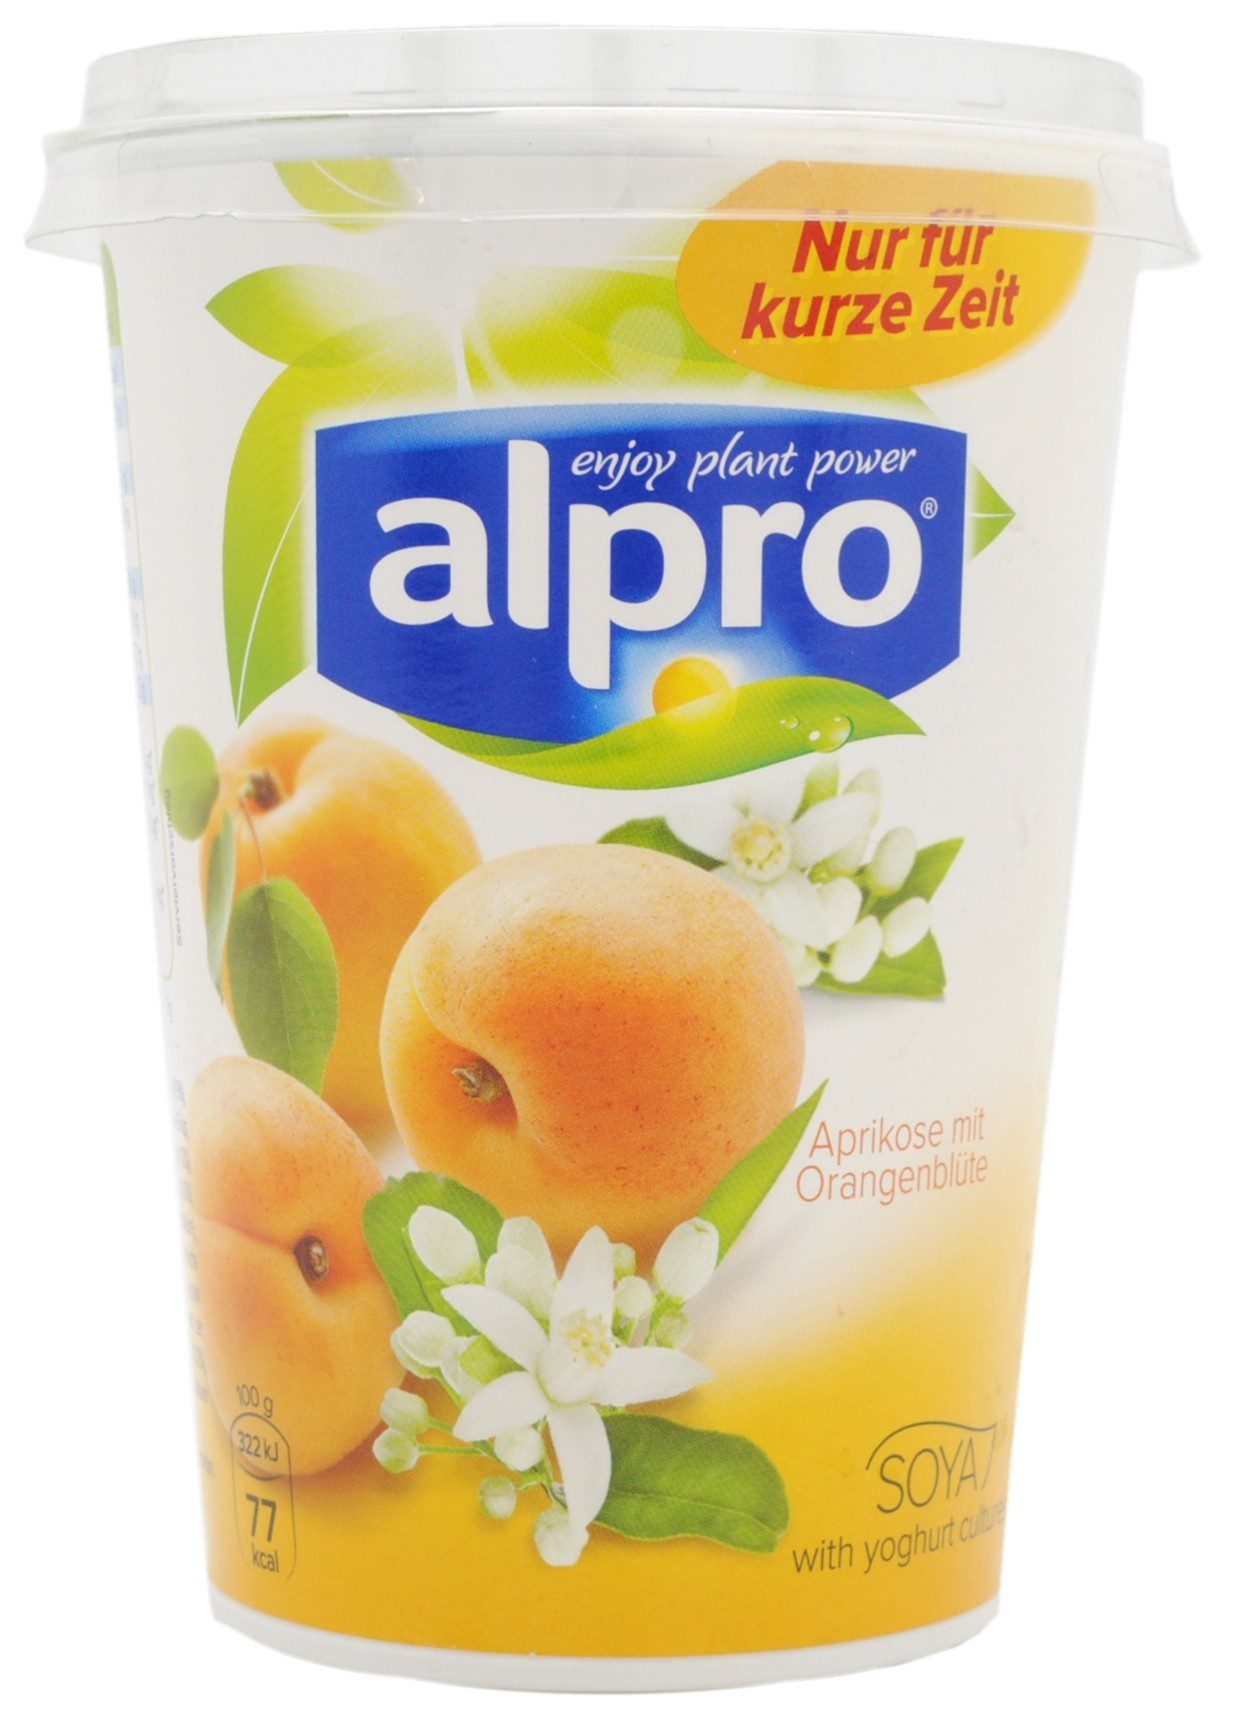 Apricot with Orange Blossom Soy Yogurt